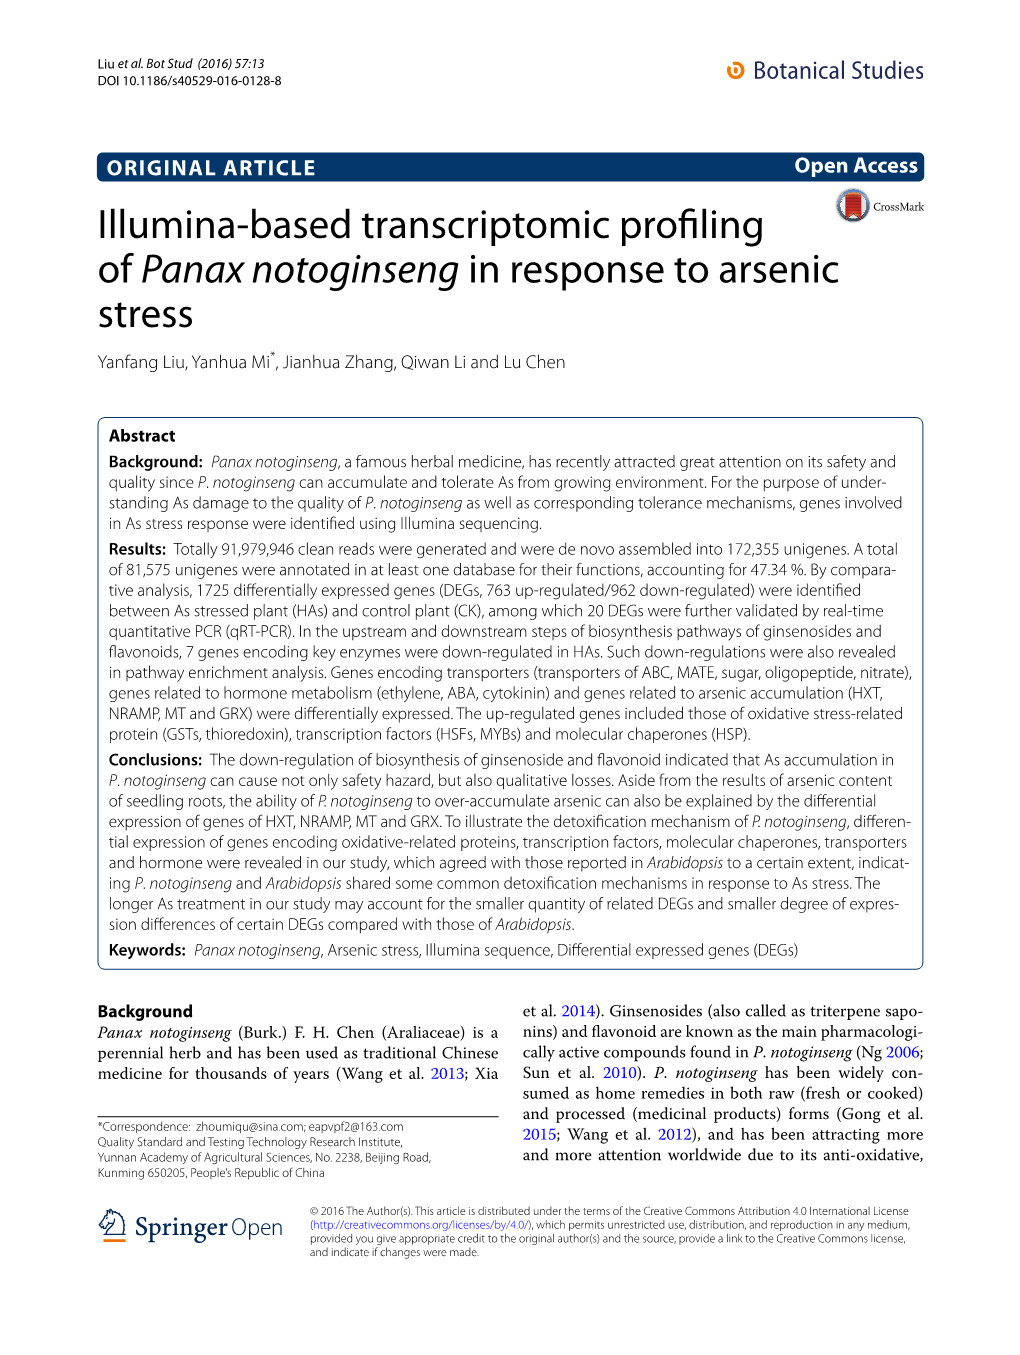 Illumina-Based Transcriptomic Profiling of Panax Notoginseng in Response